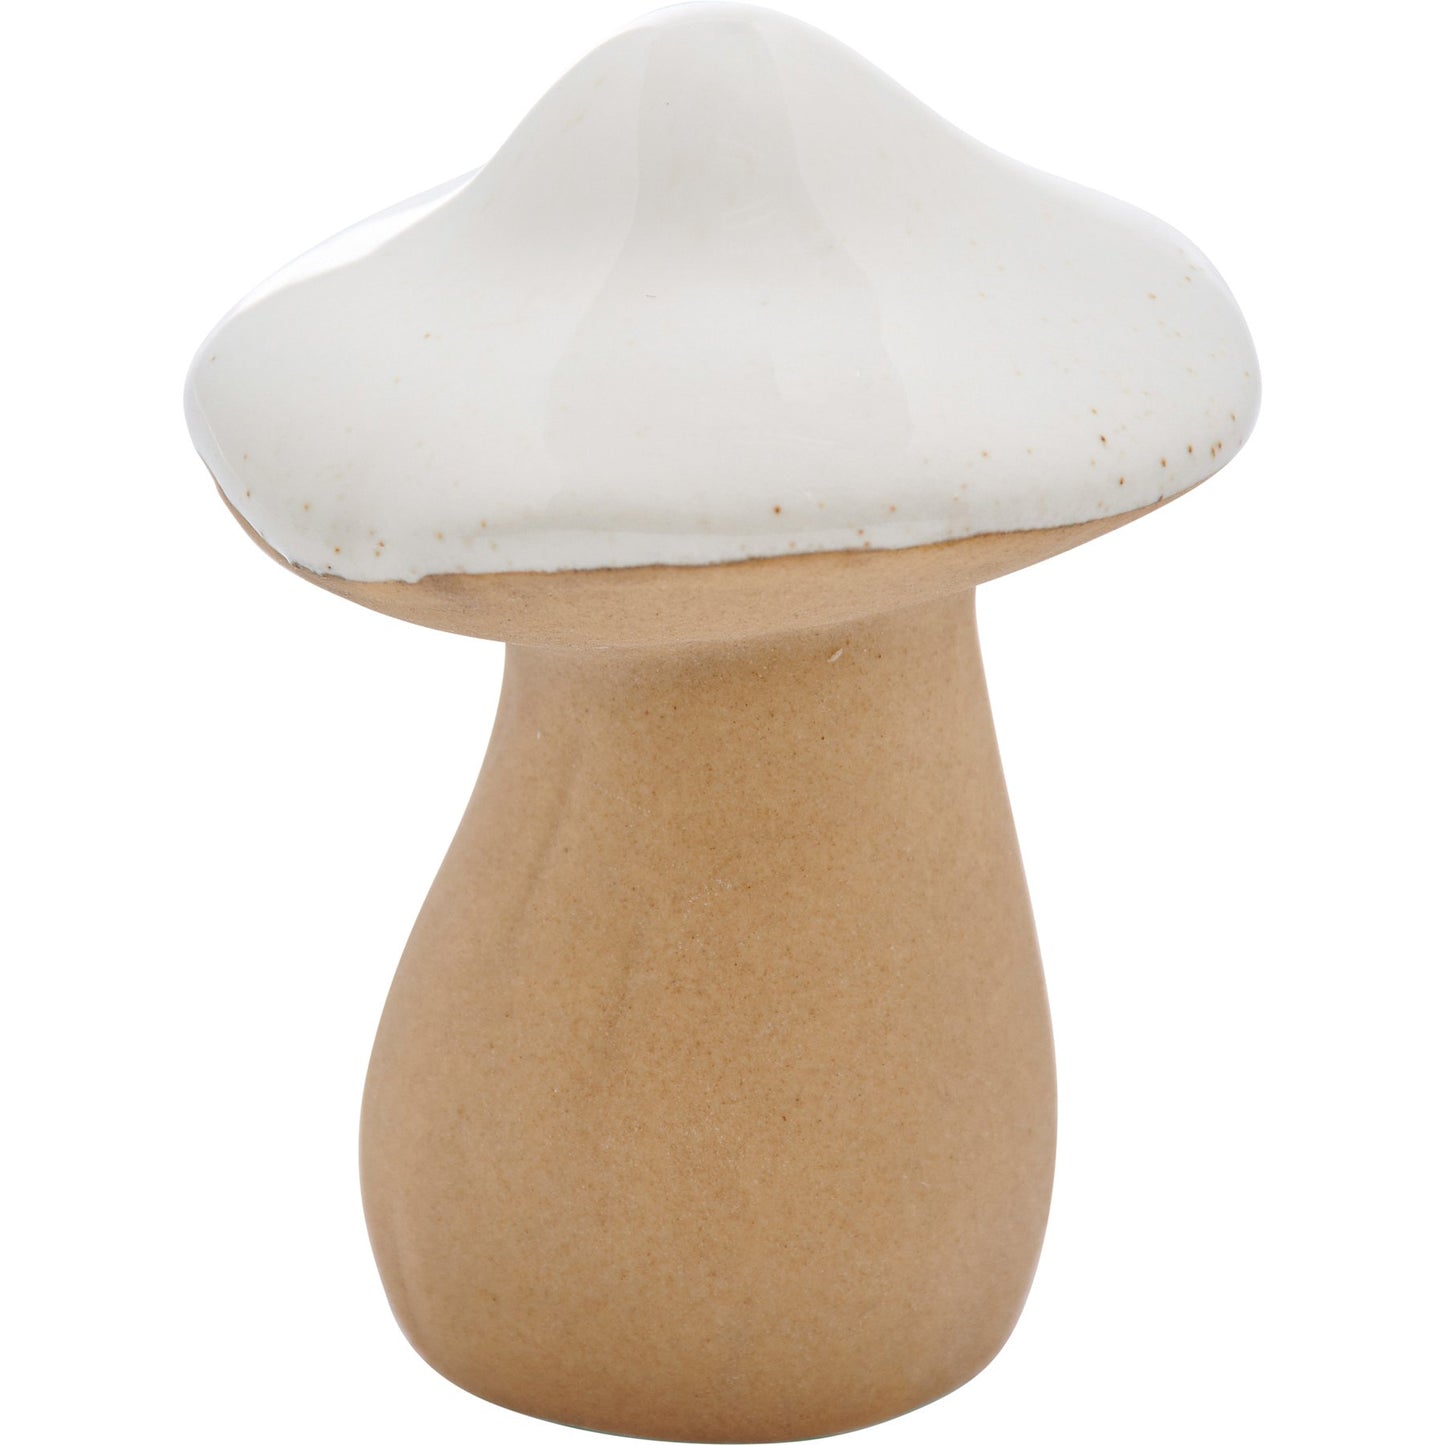 large cone mushroom figurine on a white background